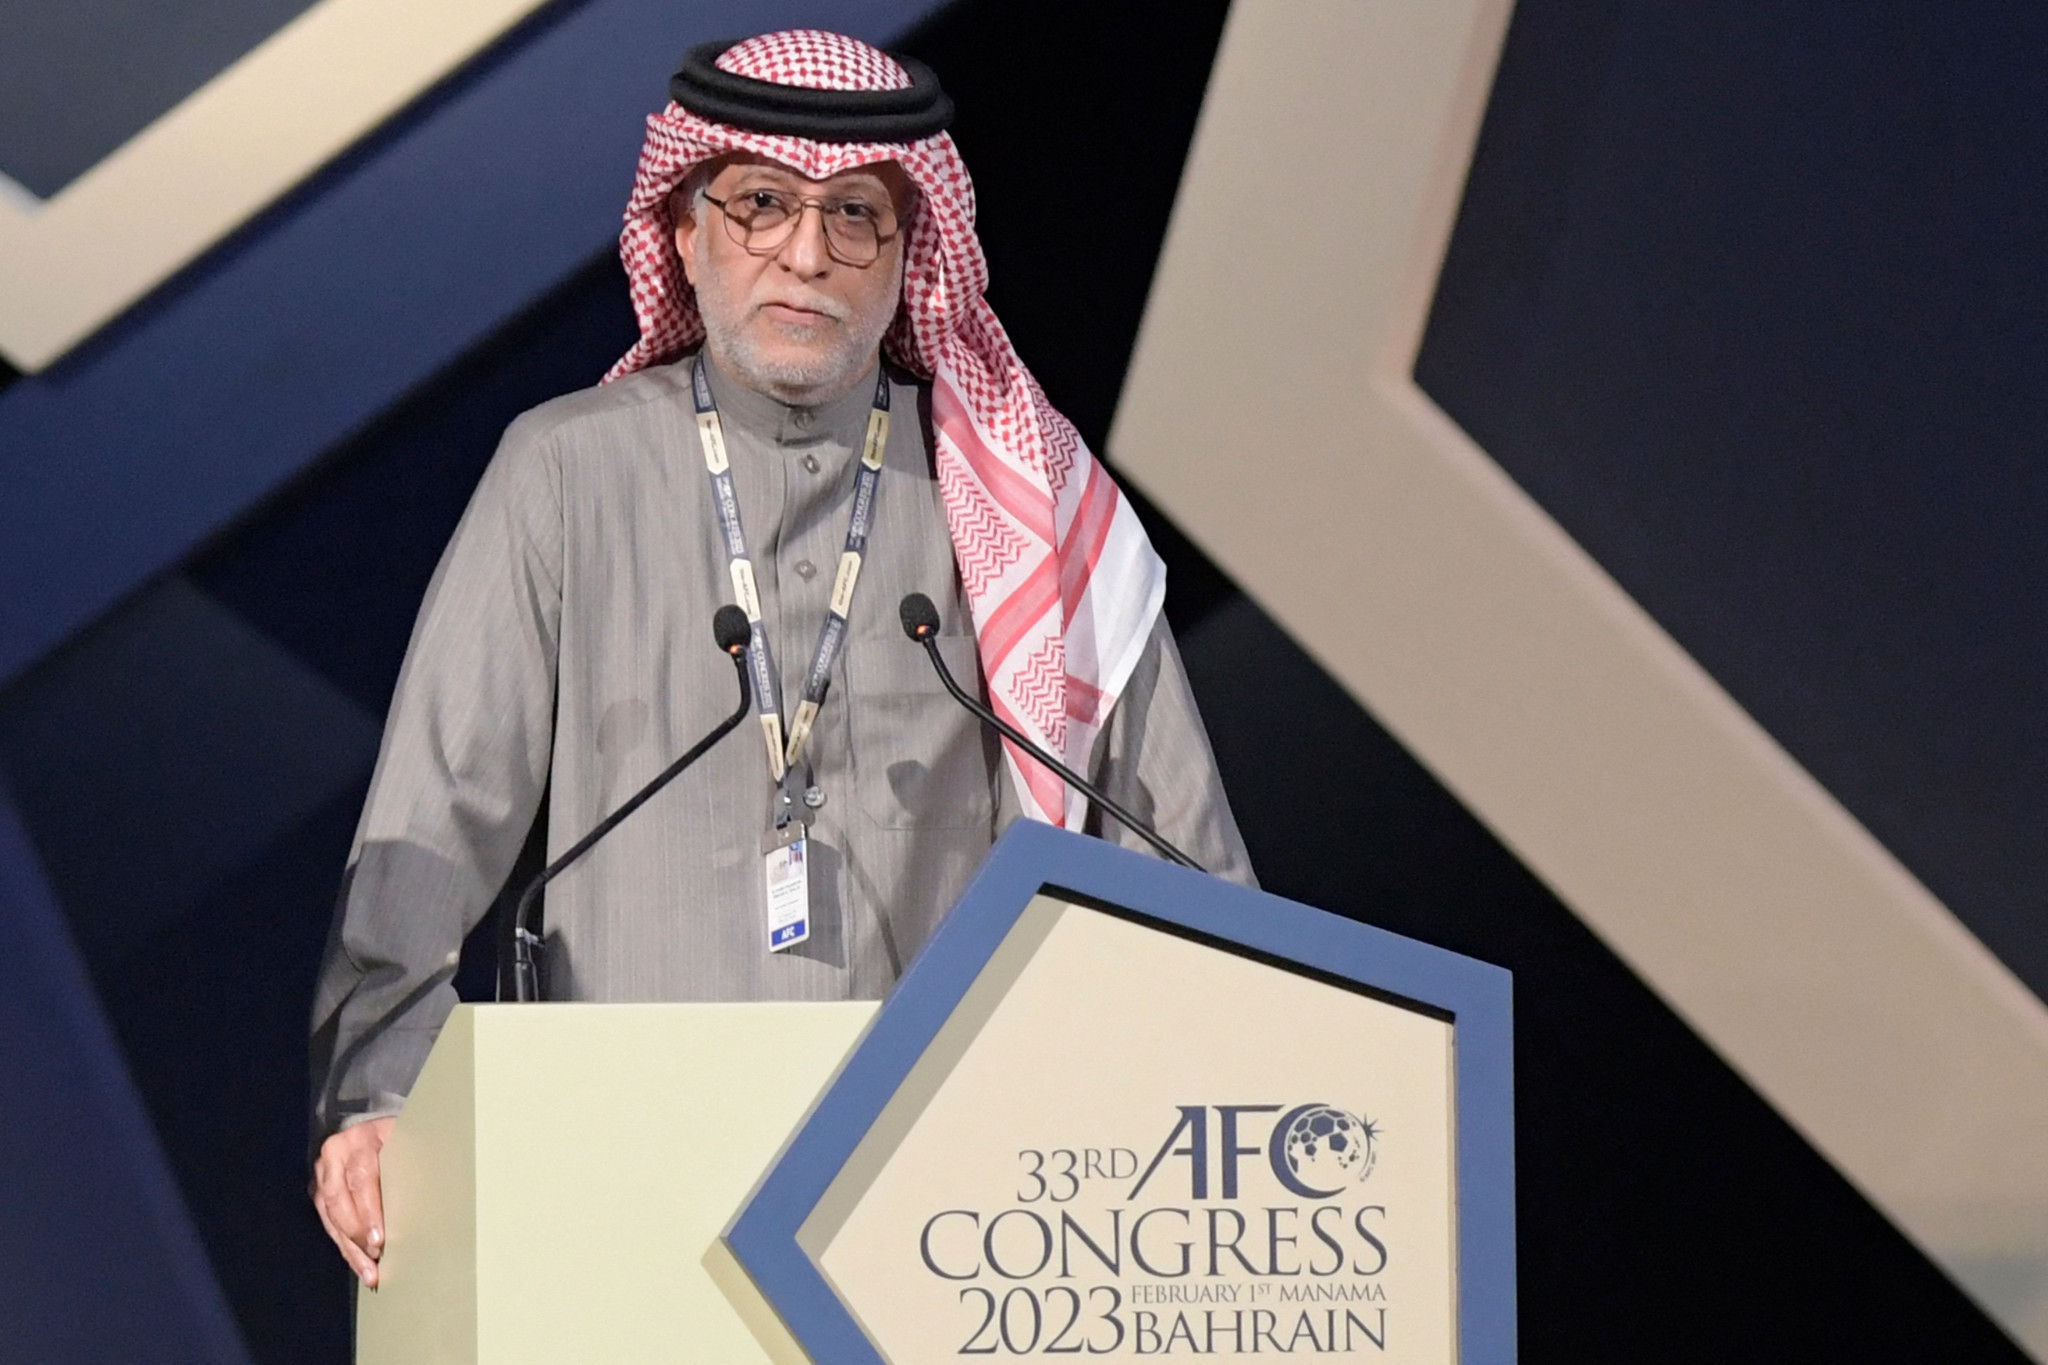 AFC President Shaikh Salman bin Ebrahim Al Khalifa has backed Saudi Arabia's bid, but Australia is also a member of the organisation ©Getty Images